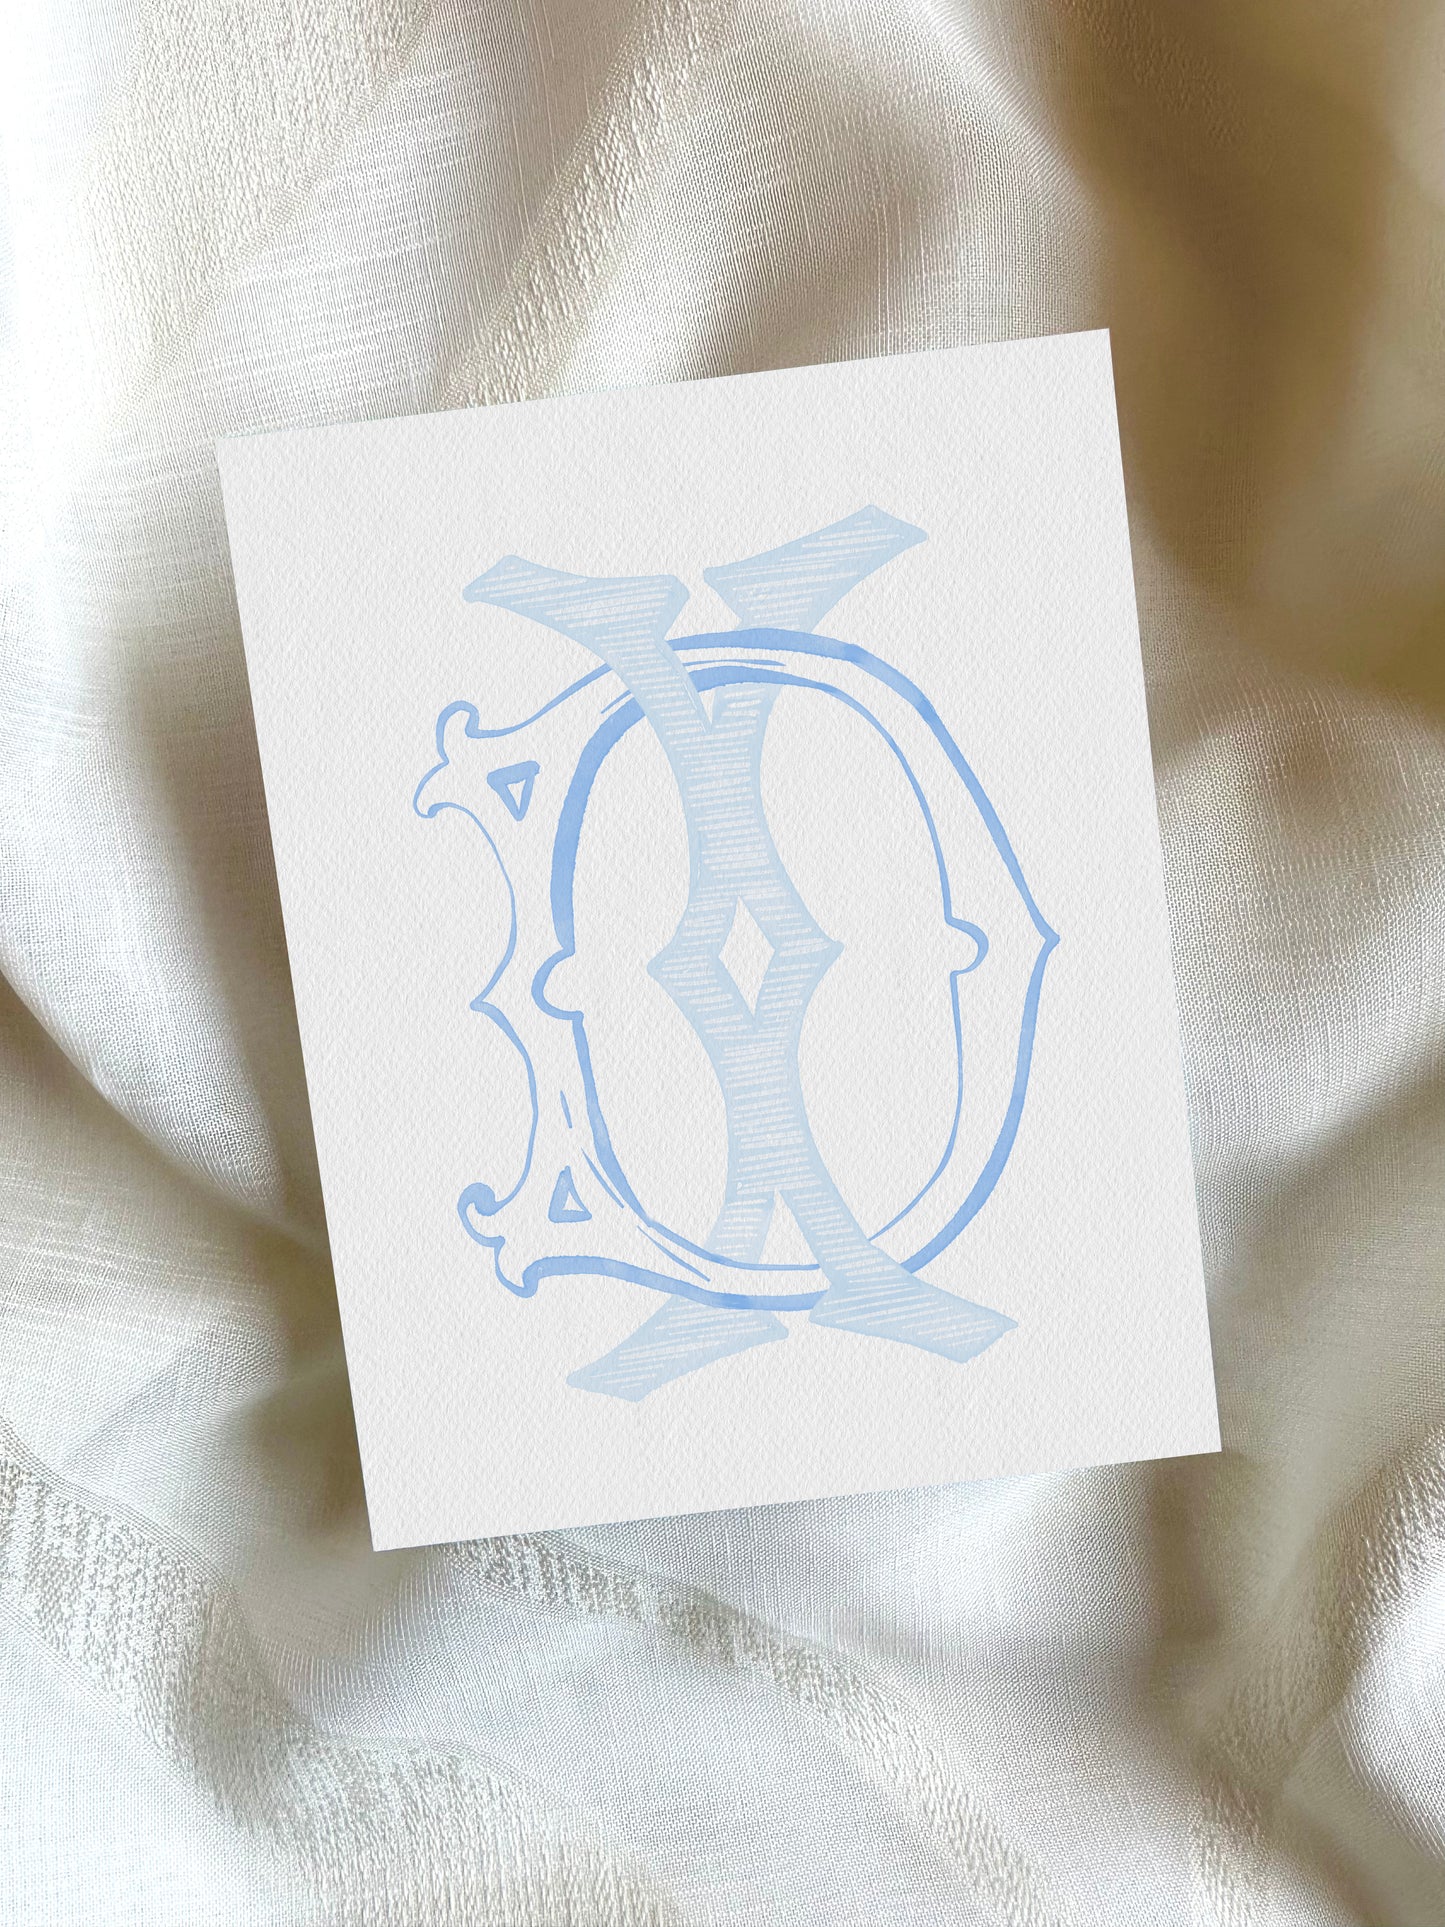 2 Letter Monogram with Letters DI ID | Digital Download - Wedding Monogram SVG, Personal Logo, Wedding Logo for Wedding Invitations The Wedding Crest Lab